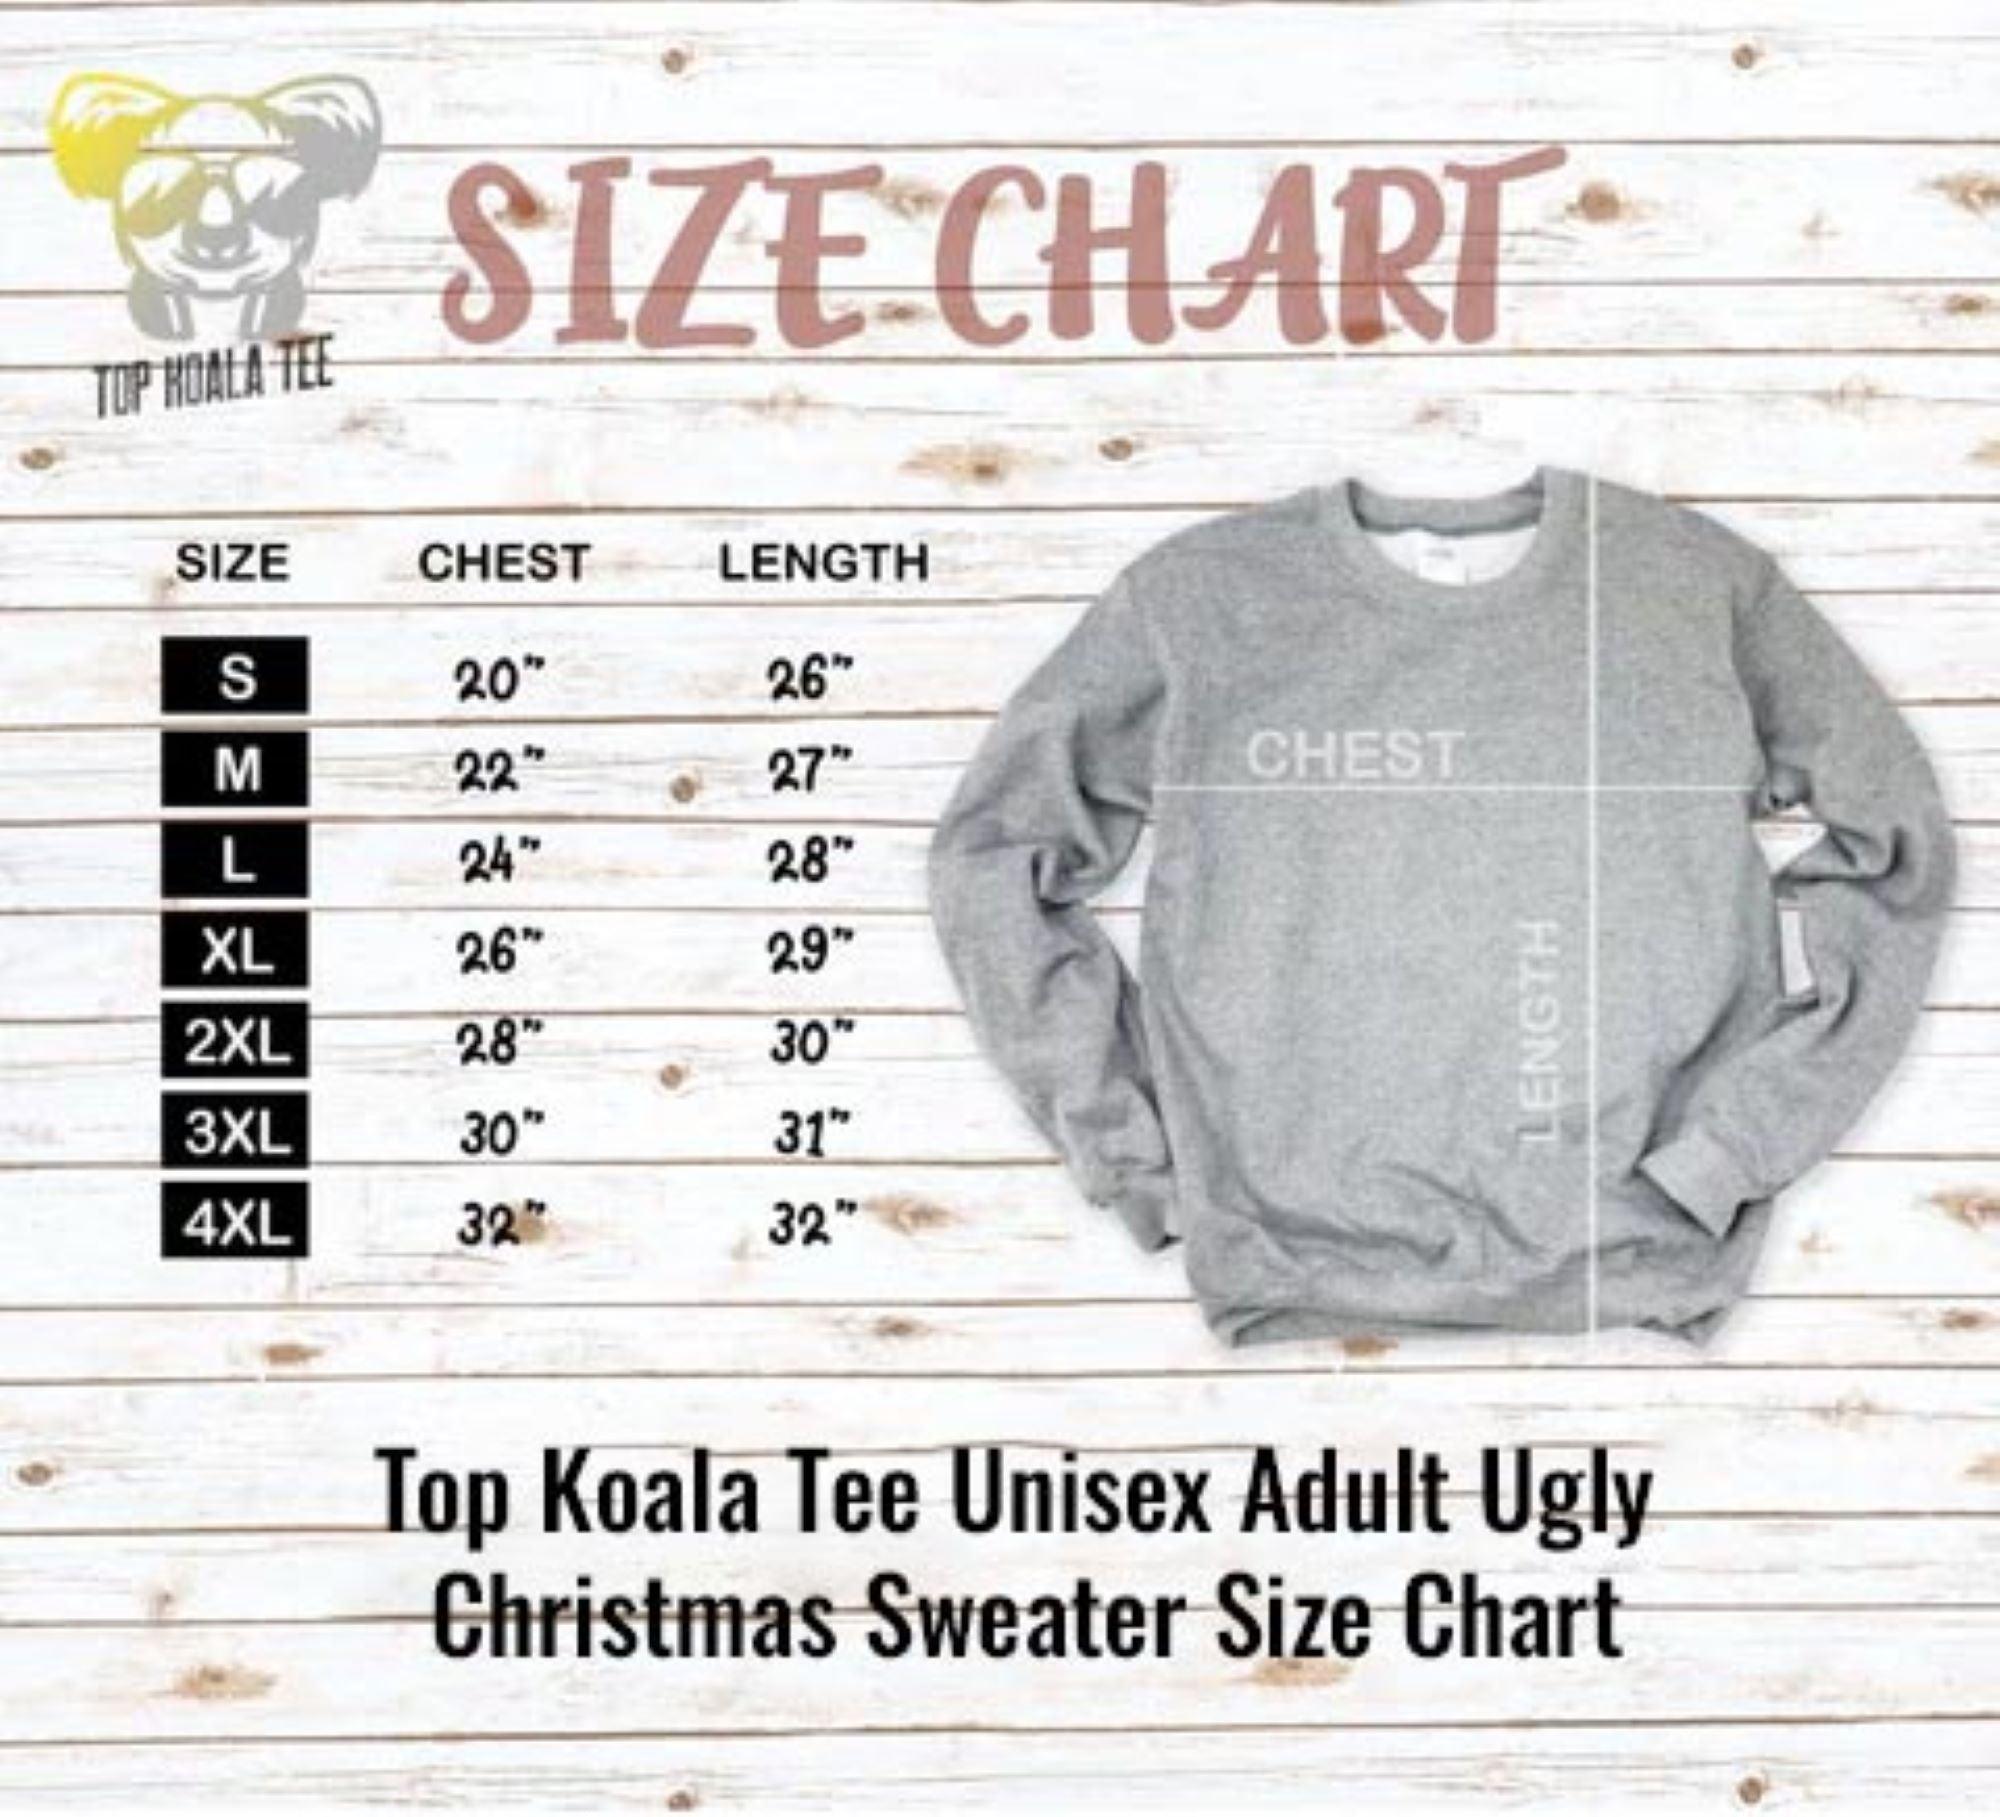 ight Imma Head Out Ugly Christmas Sweater - TopKoalaTee